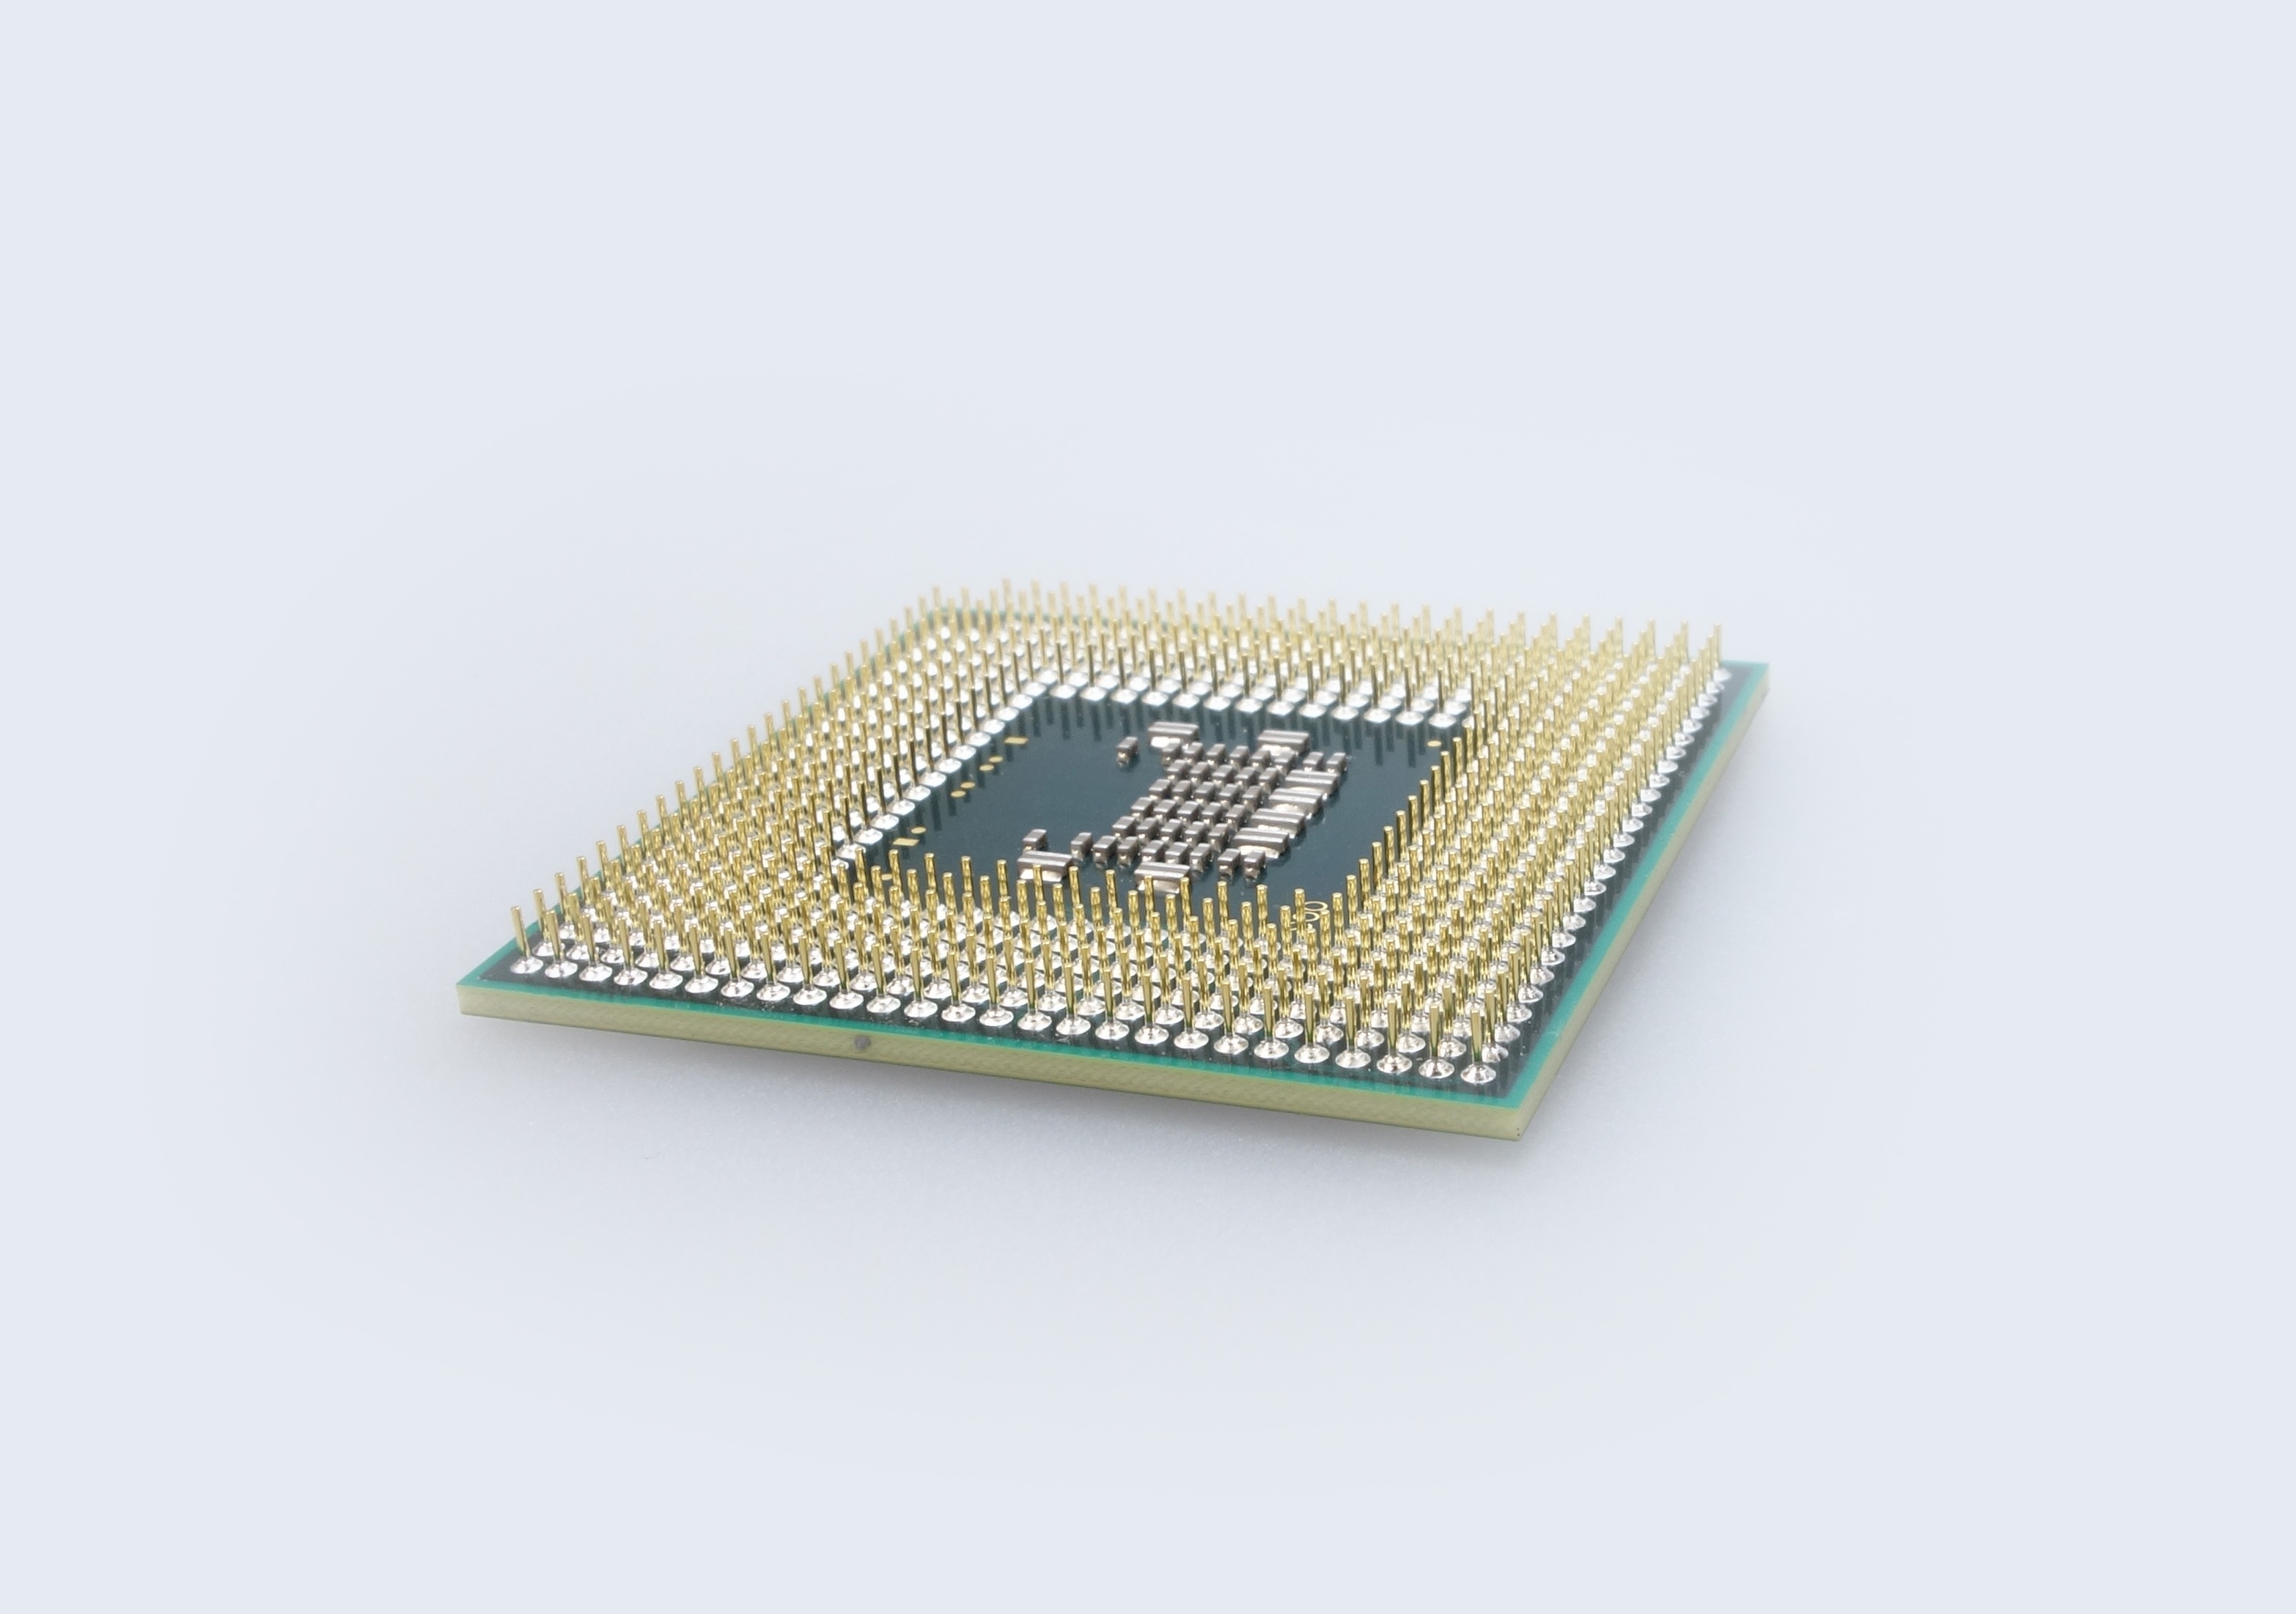 Intel sde. Процессор (CPU) микропроцессор. Микропроцессор Интел. Процессор gforce256. Чип процессора Интел.